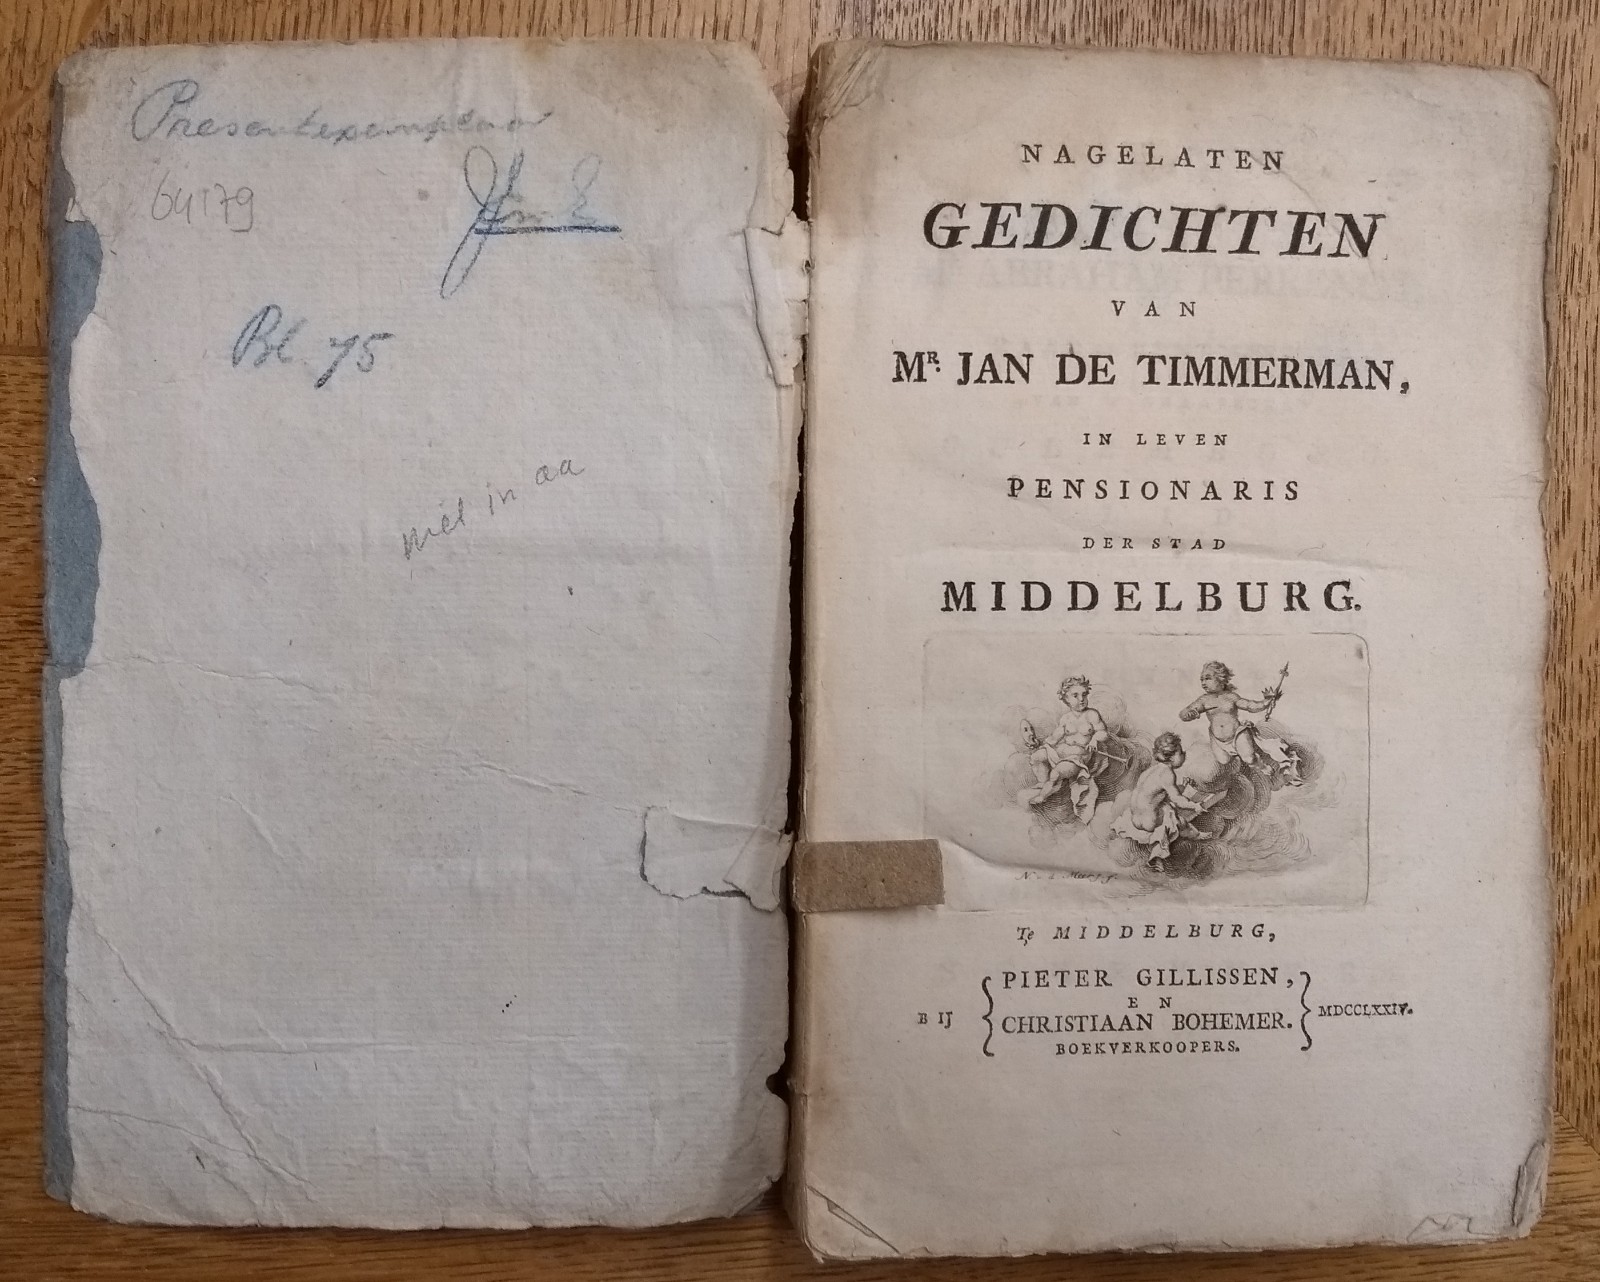 TIMMERMAN, MR. JAN DE, Nagelaten gedichten van Mr. Jan de Timmerman, in leven pensionaris der stad Middelburg